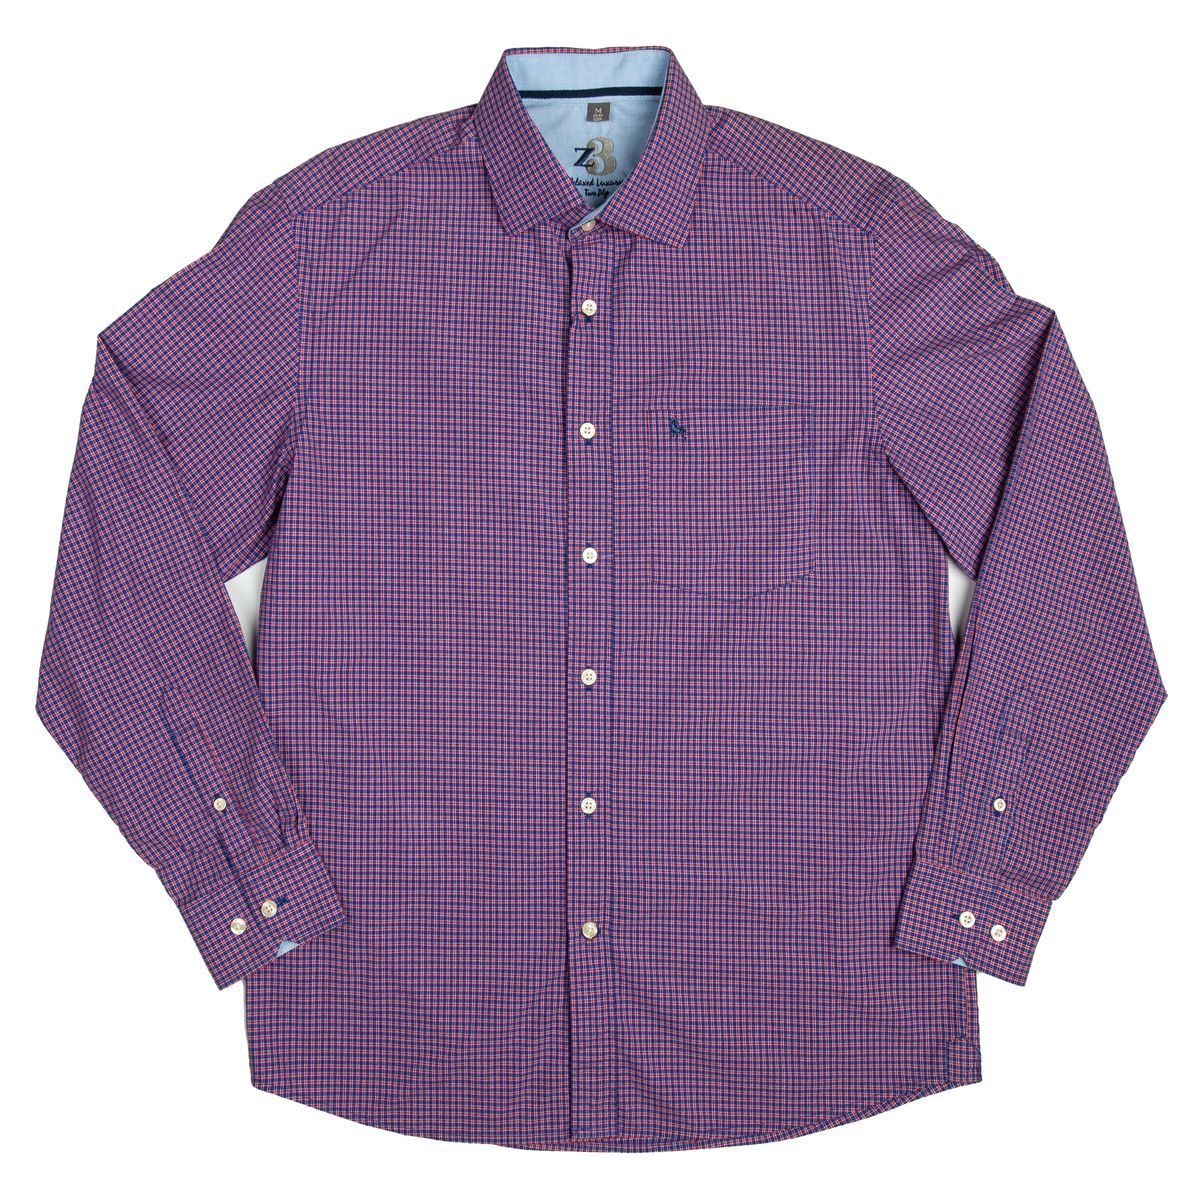 Z3 - Men's Vette Cheacked Long Sleeve Cotton Shirt | Shop Today. Get it ...